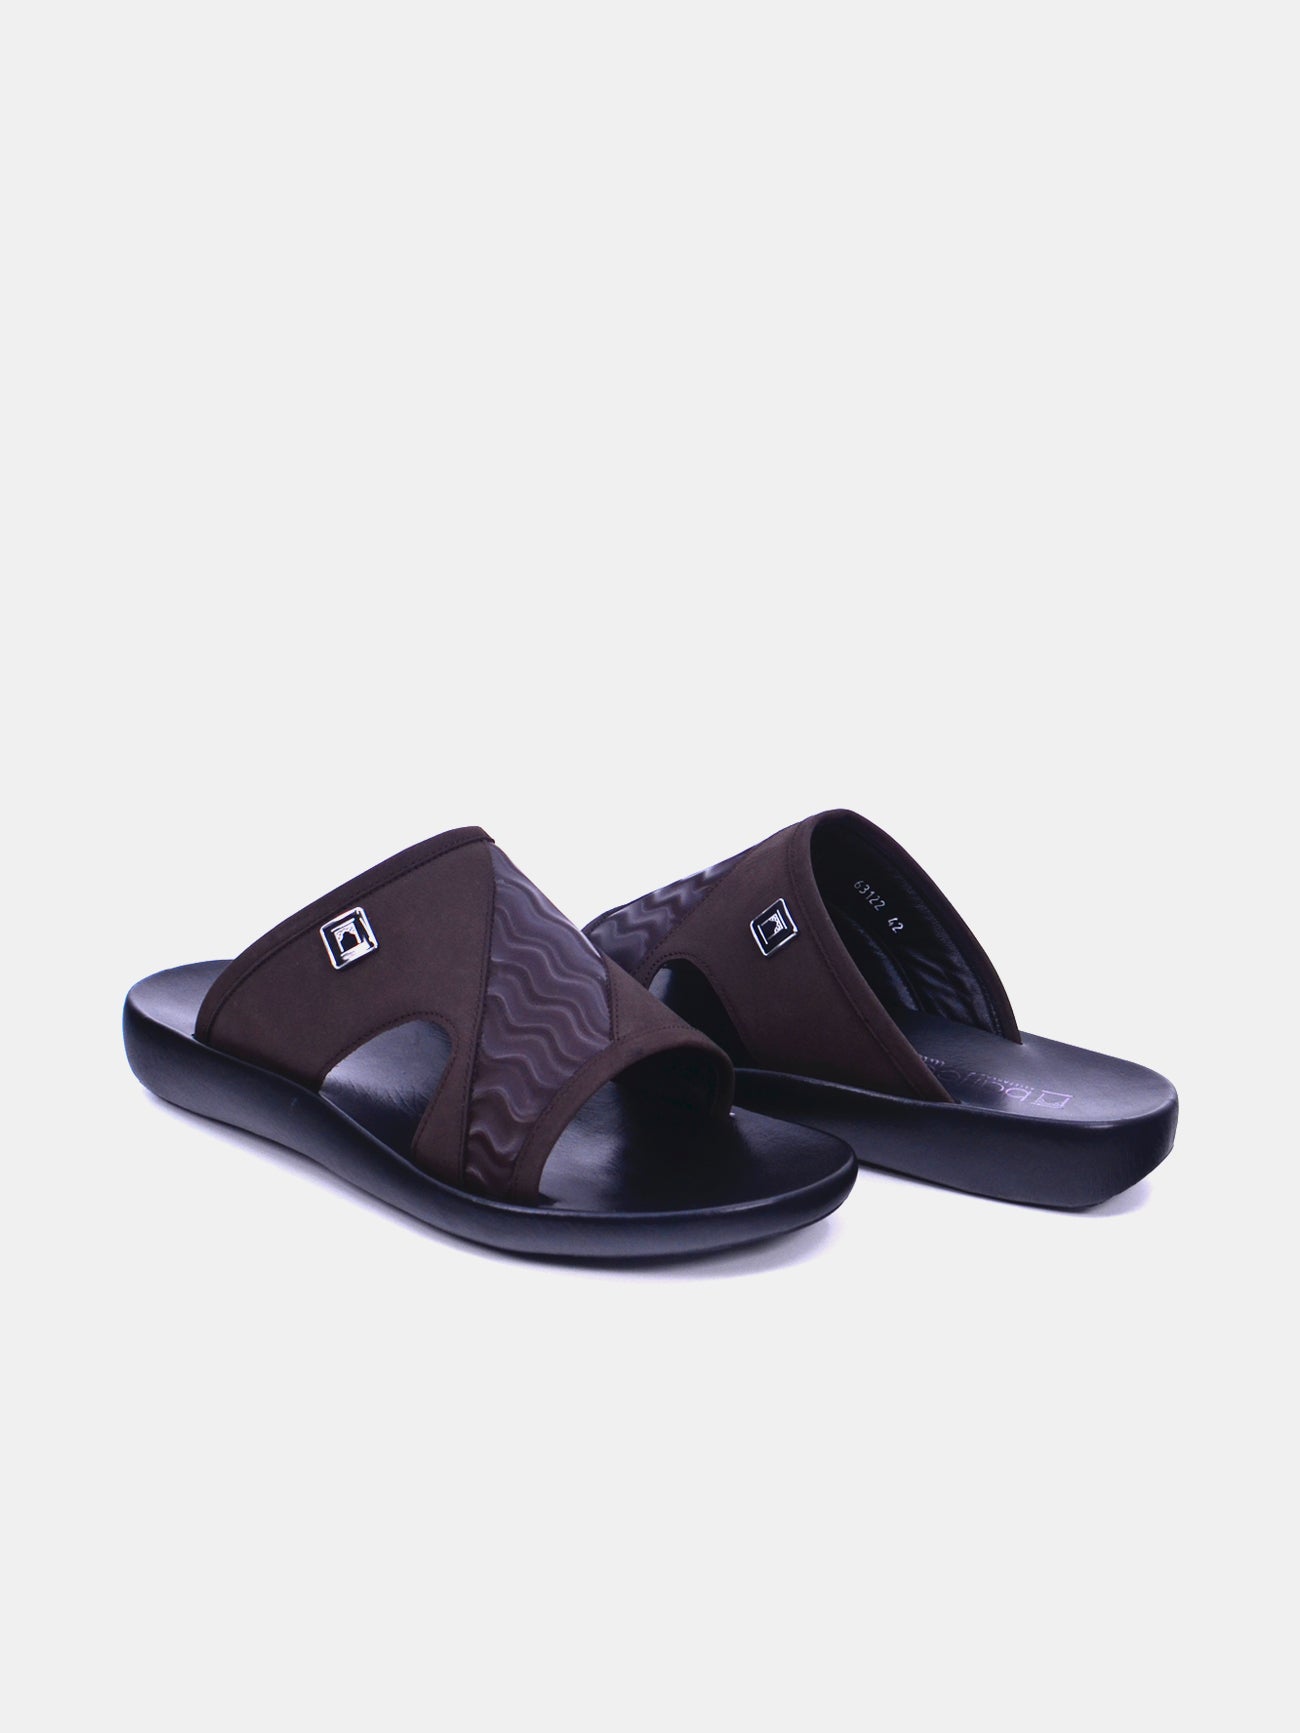 Barjeel Uno 63122 Men's Sandals #color_Brown